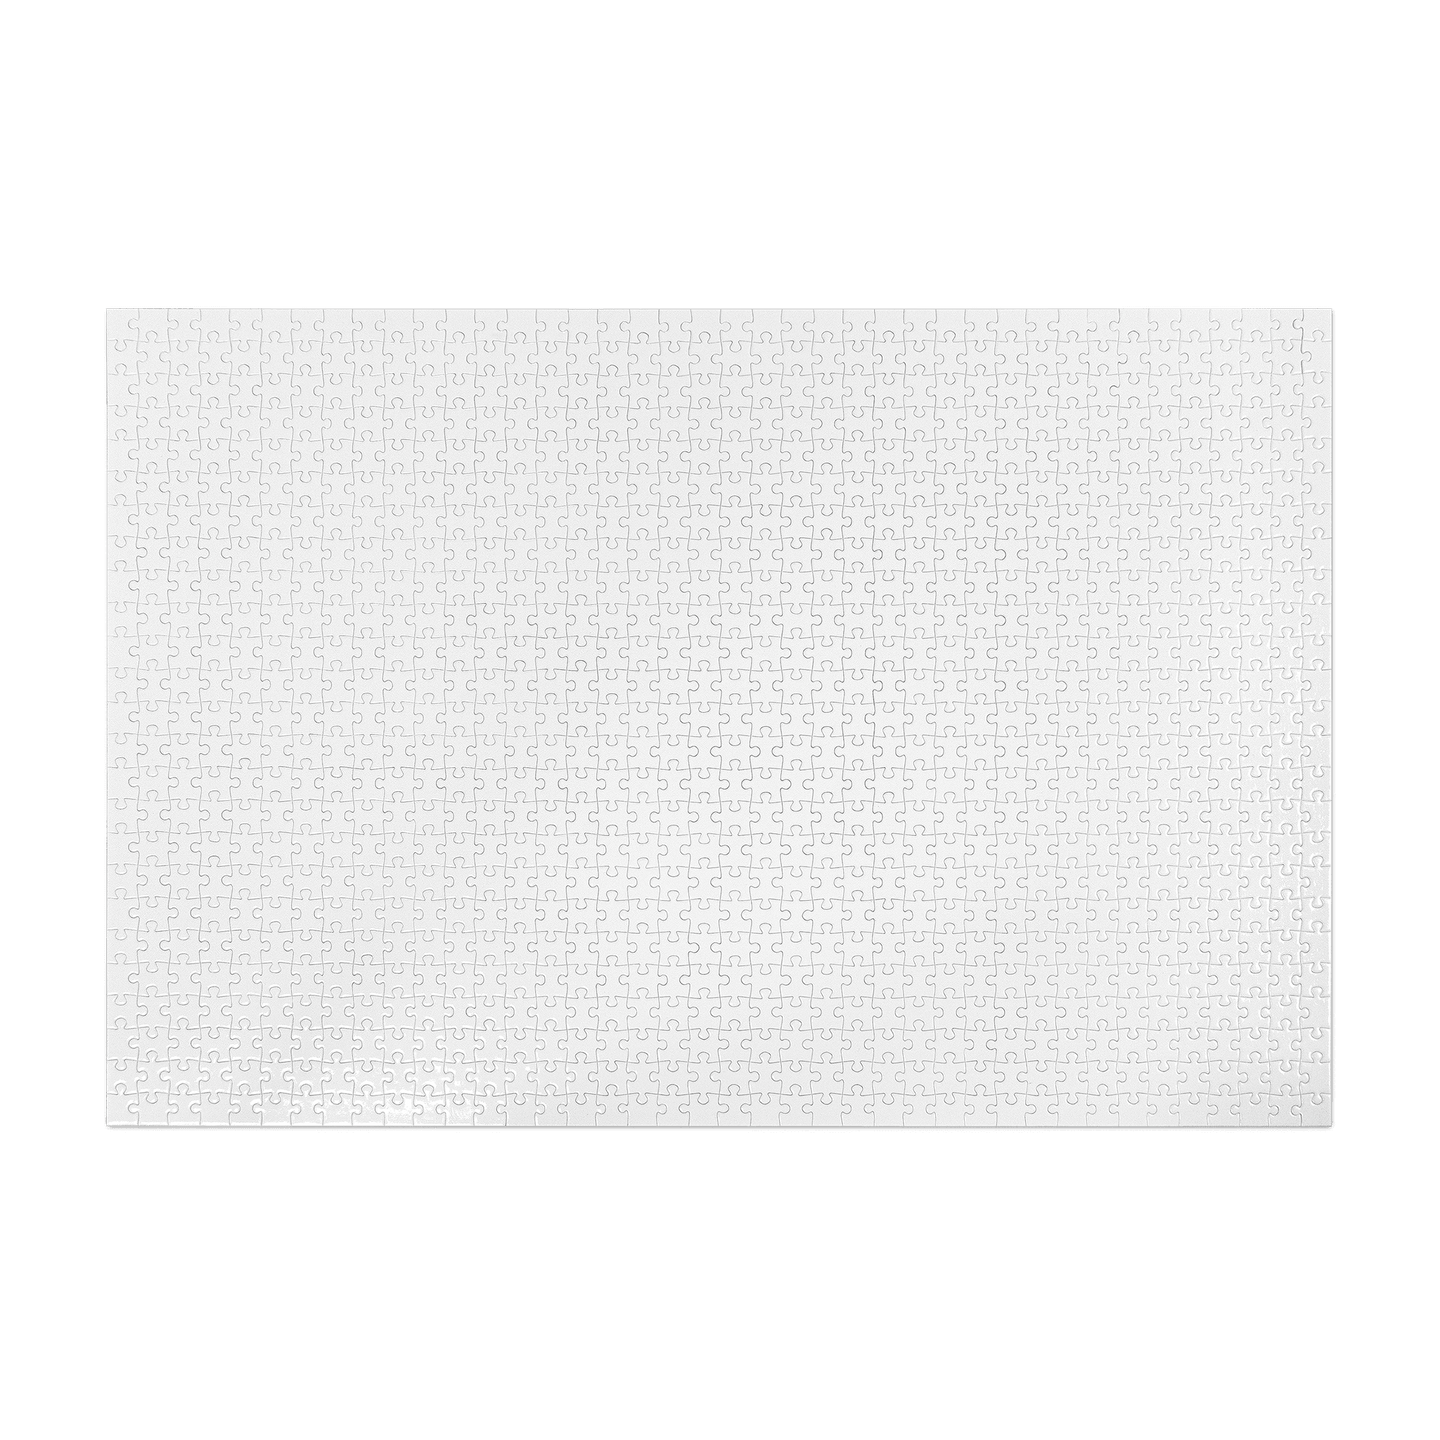 Large Blank Jigsaw Puzzle 1000 Piece